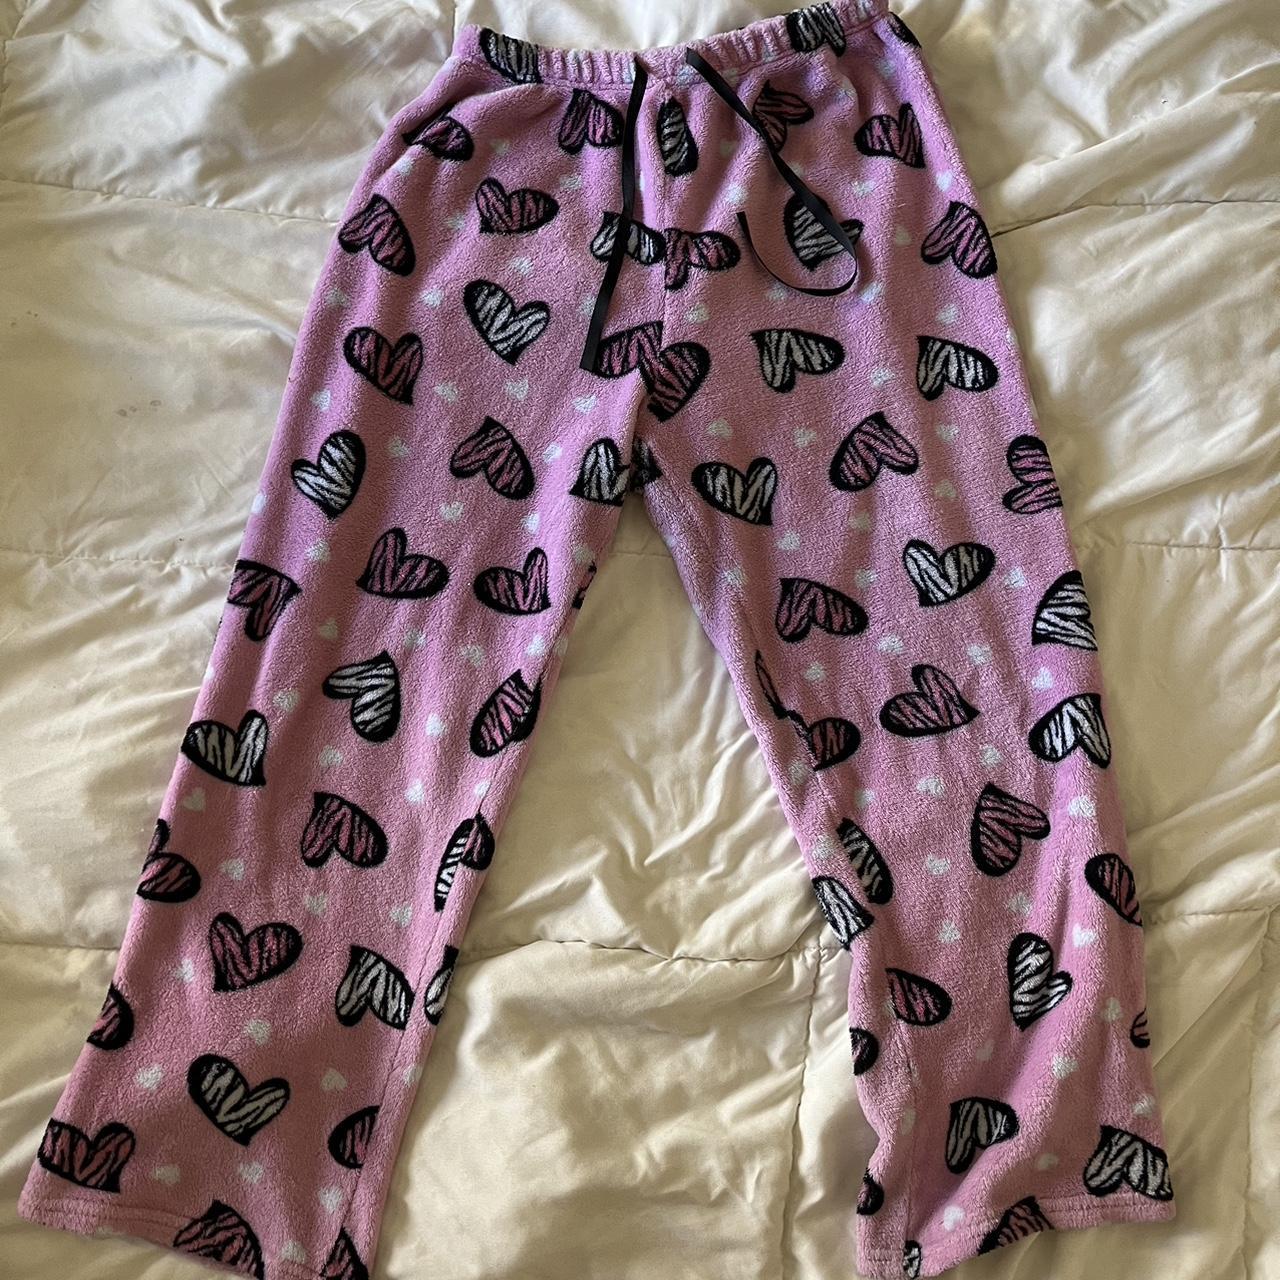 Nickelodeon Happy Pajama Pants for Women